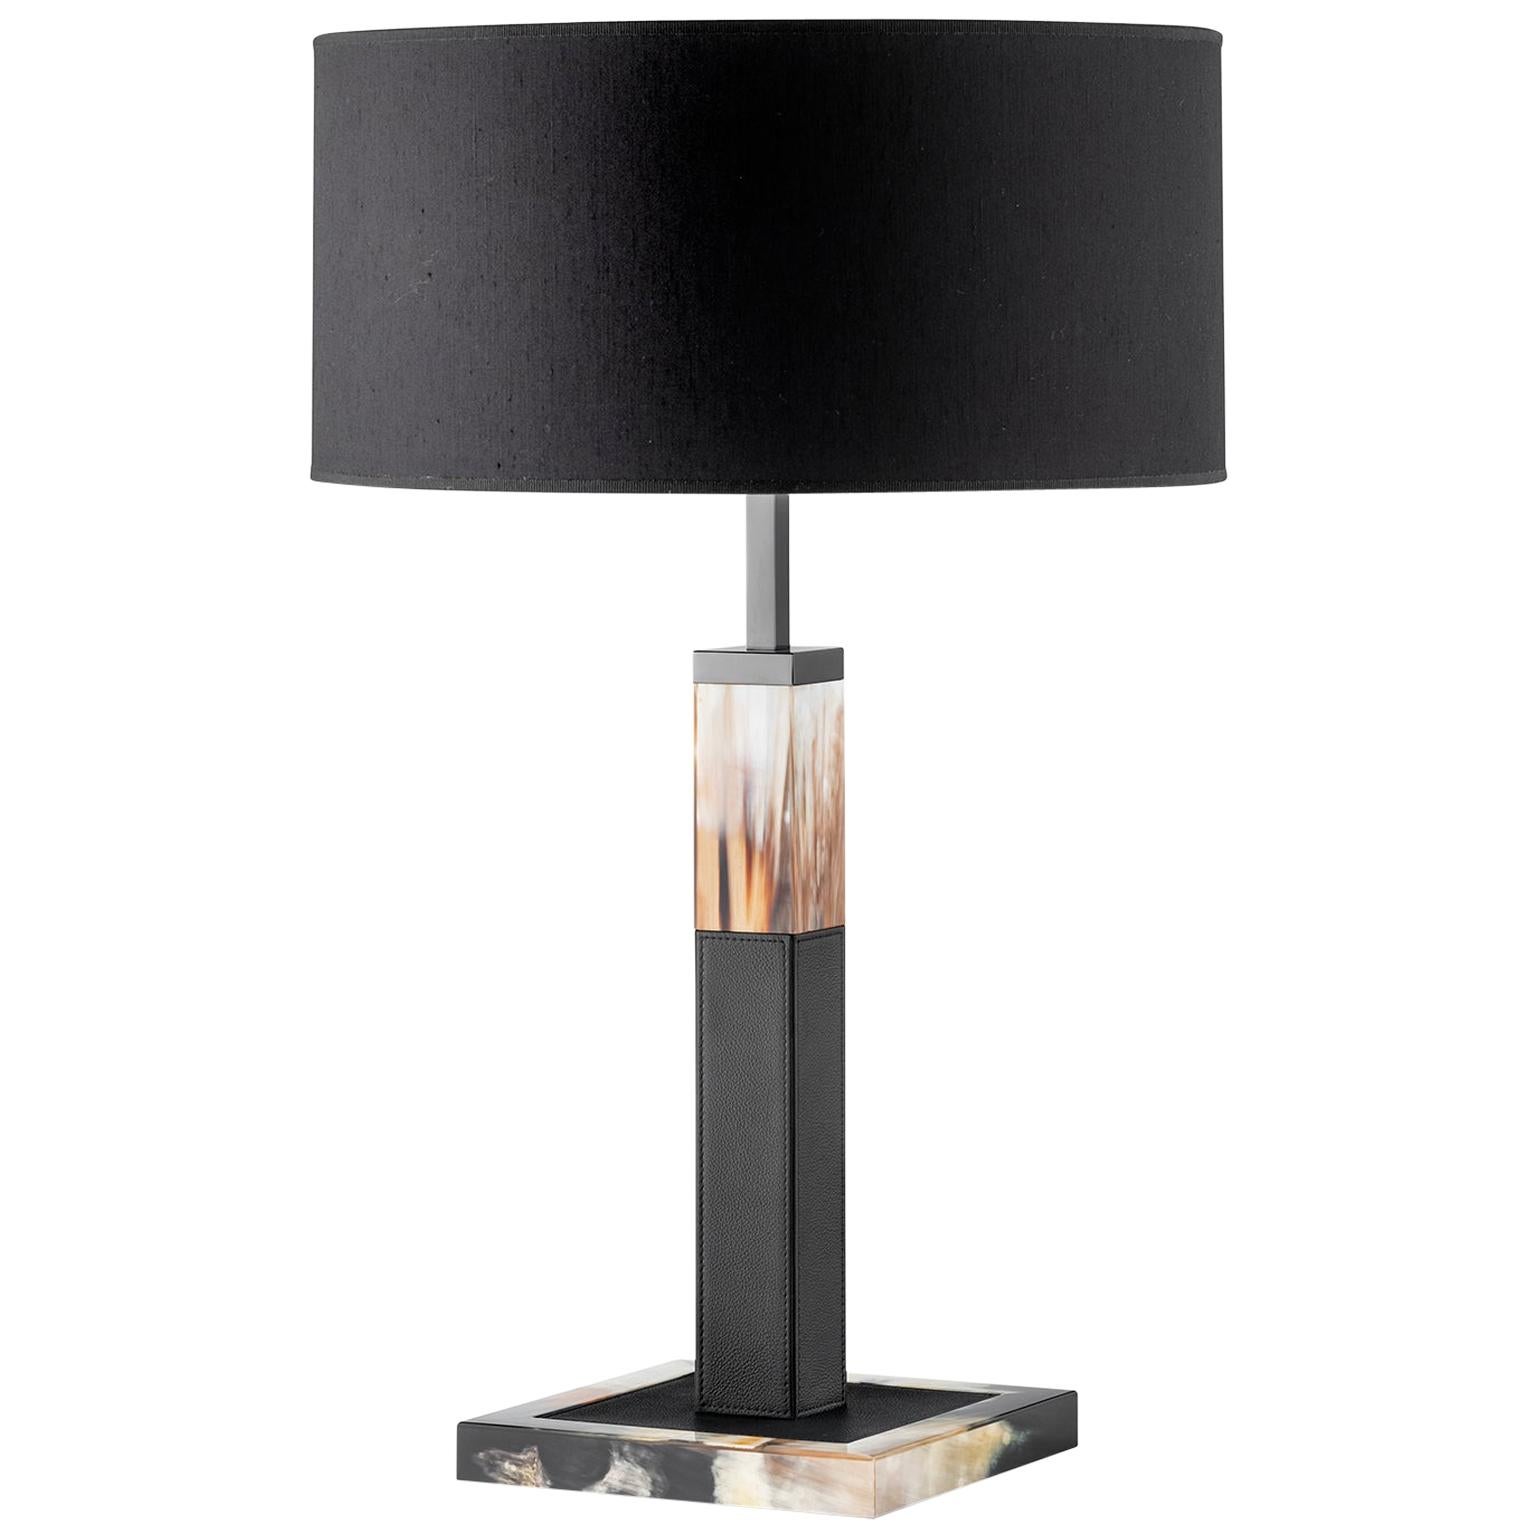 Alma Table Lamp in Black Leather with Inlays in Corno Italiano, Mod. 2312